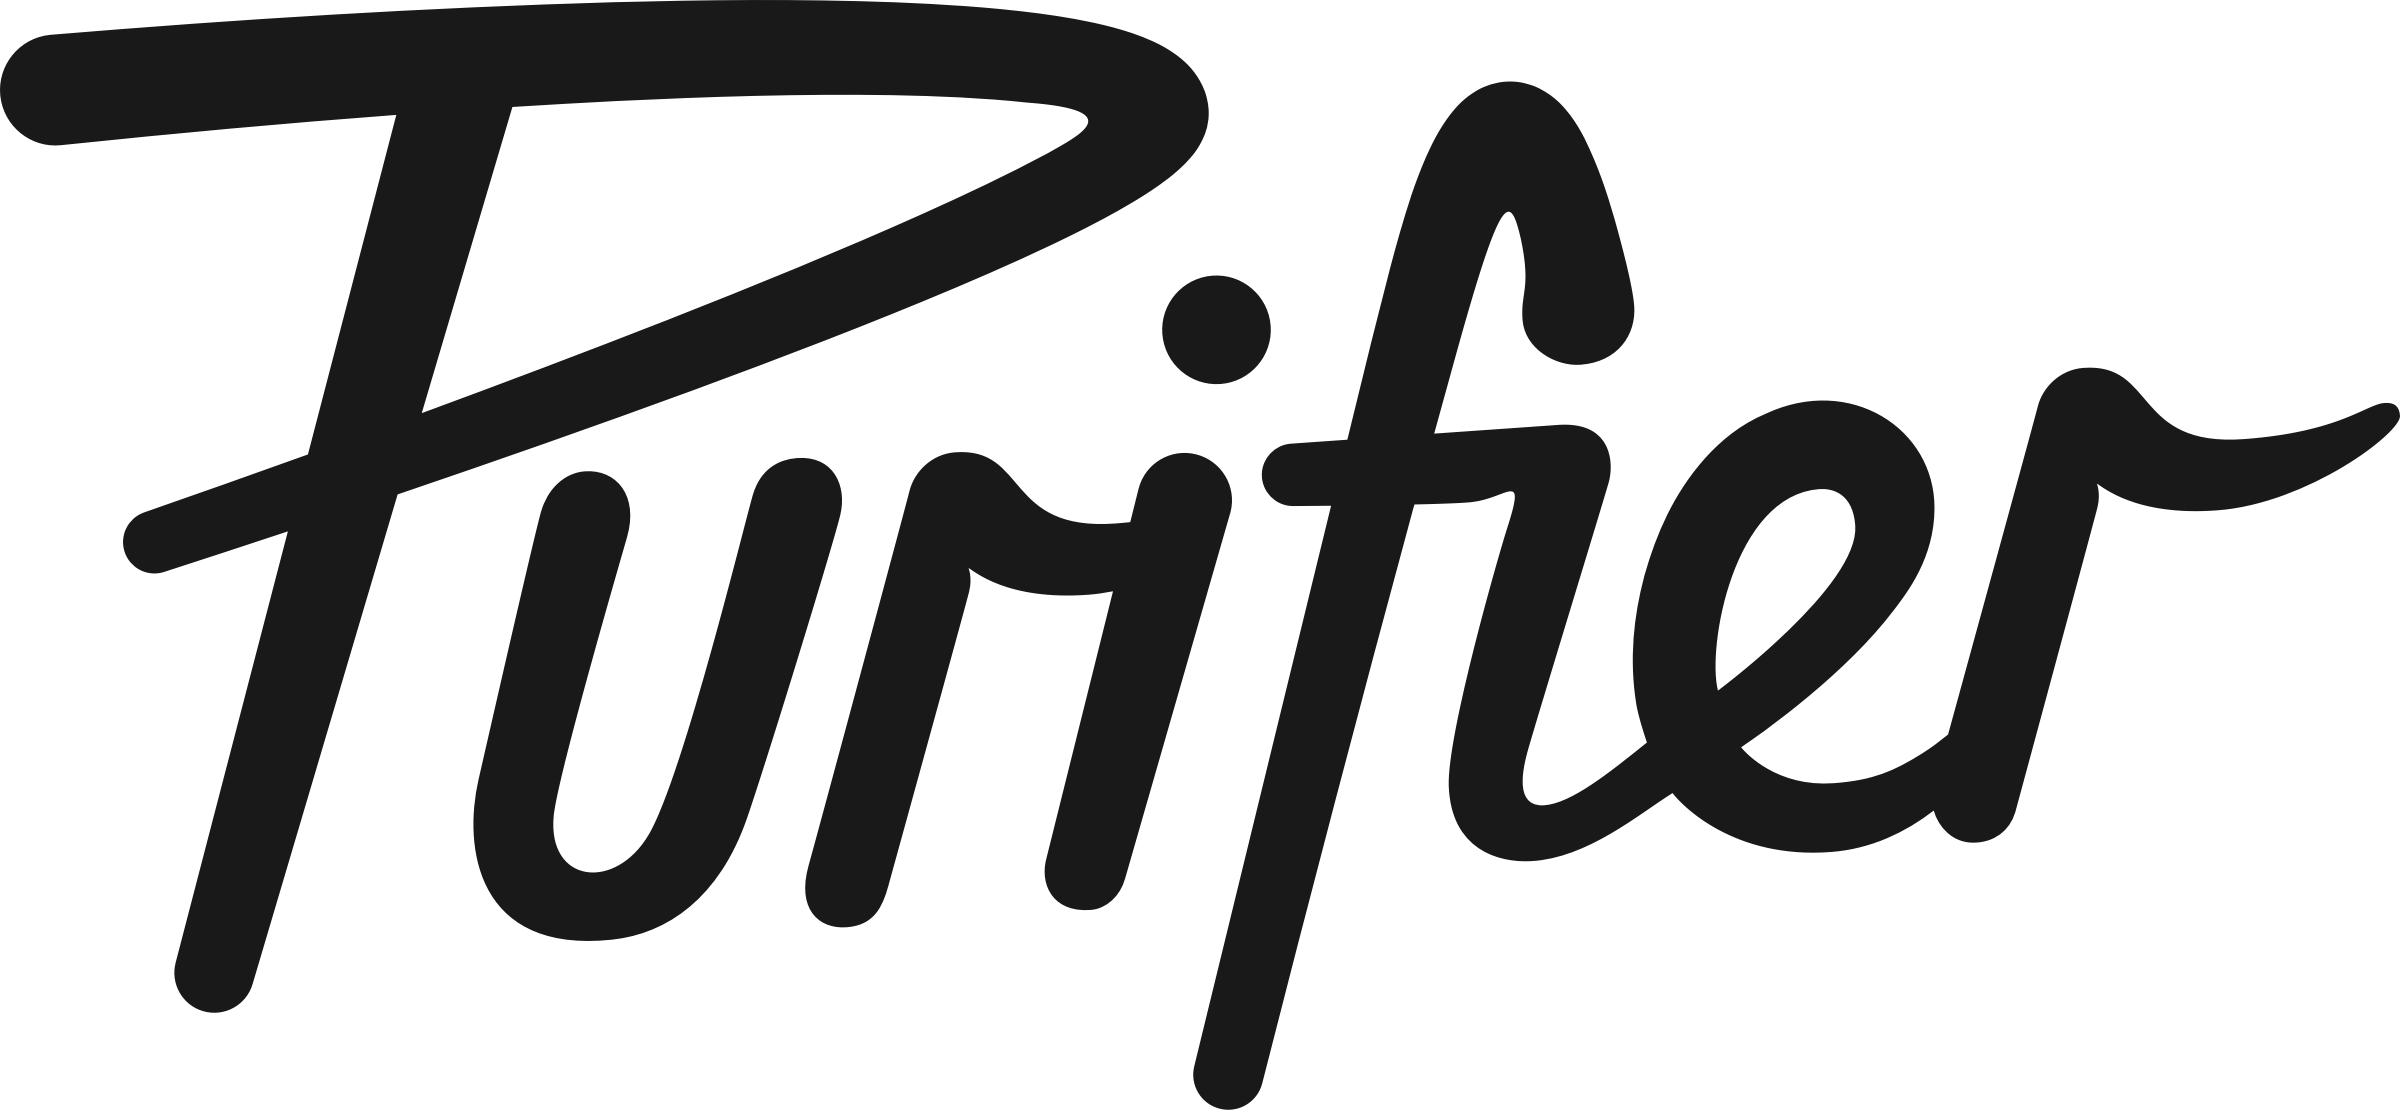 Purifier logotype